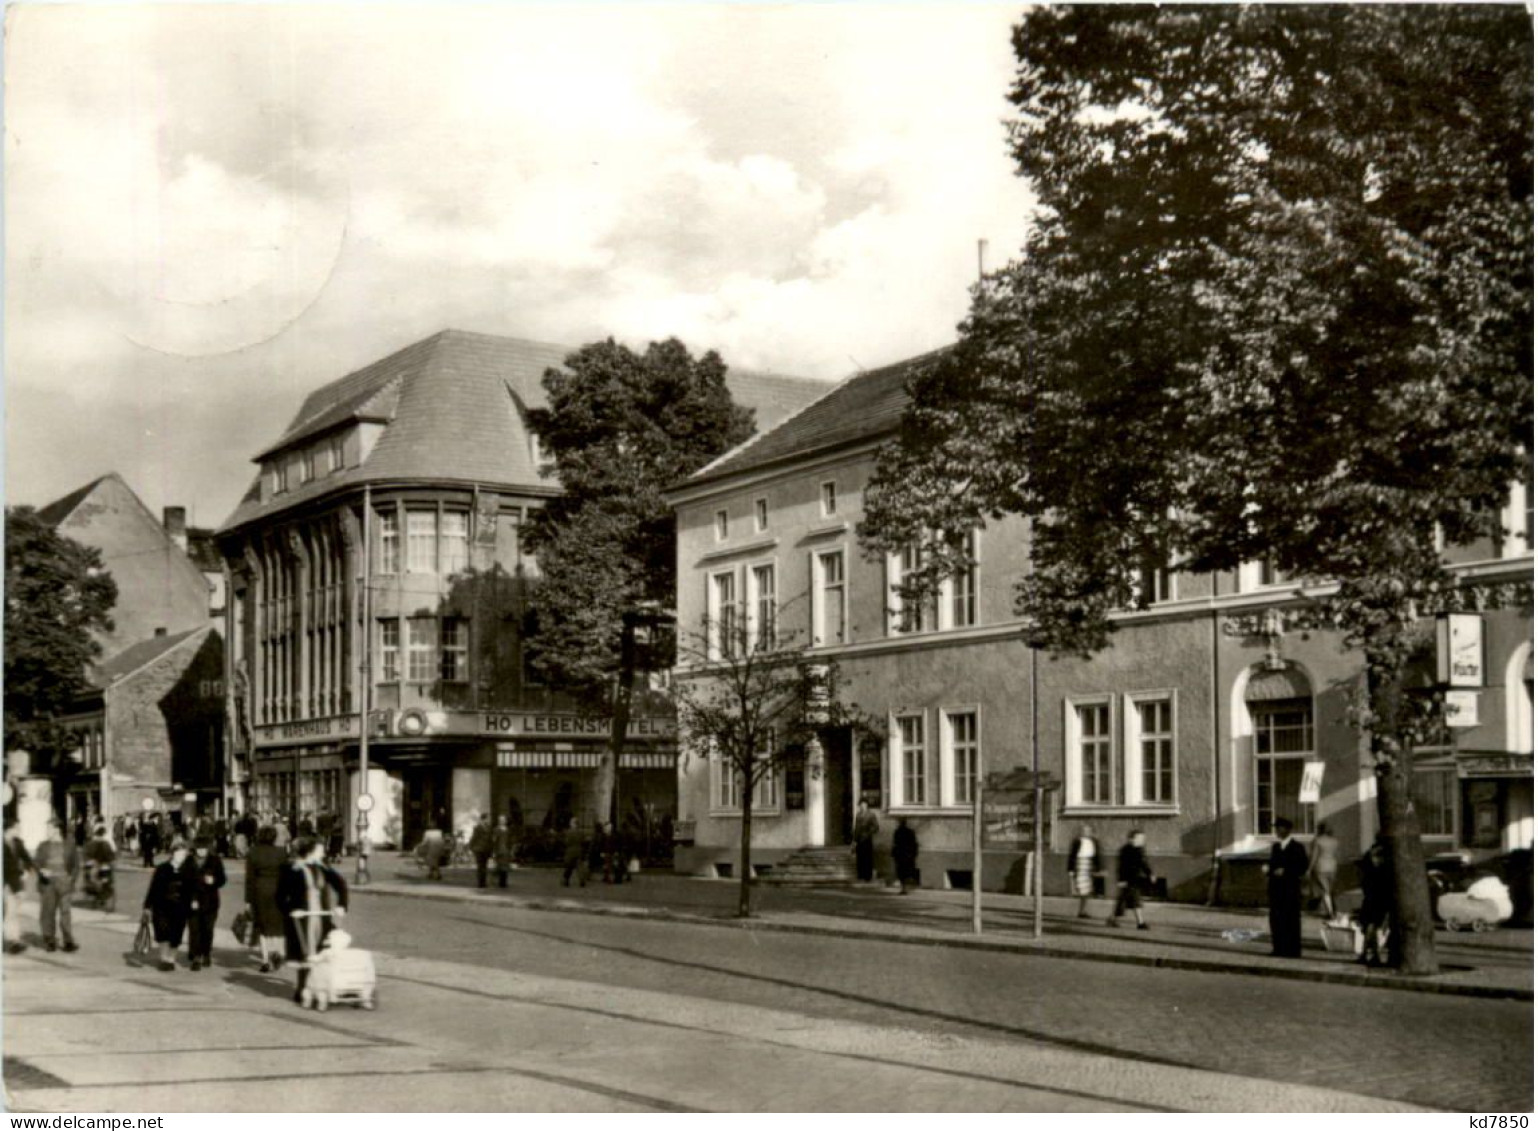 Wittenberge, Bahnstrasse - Wittenberge